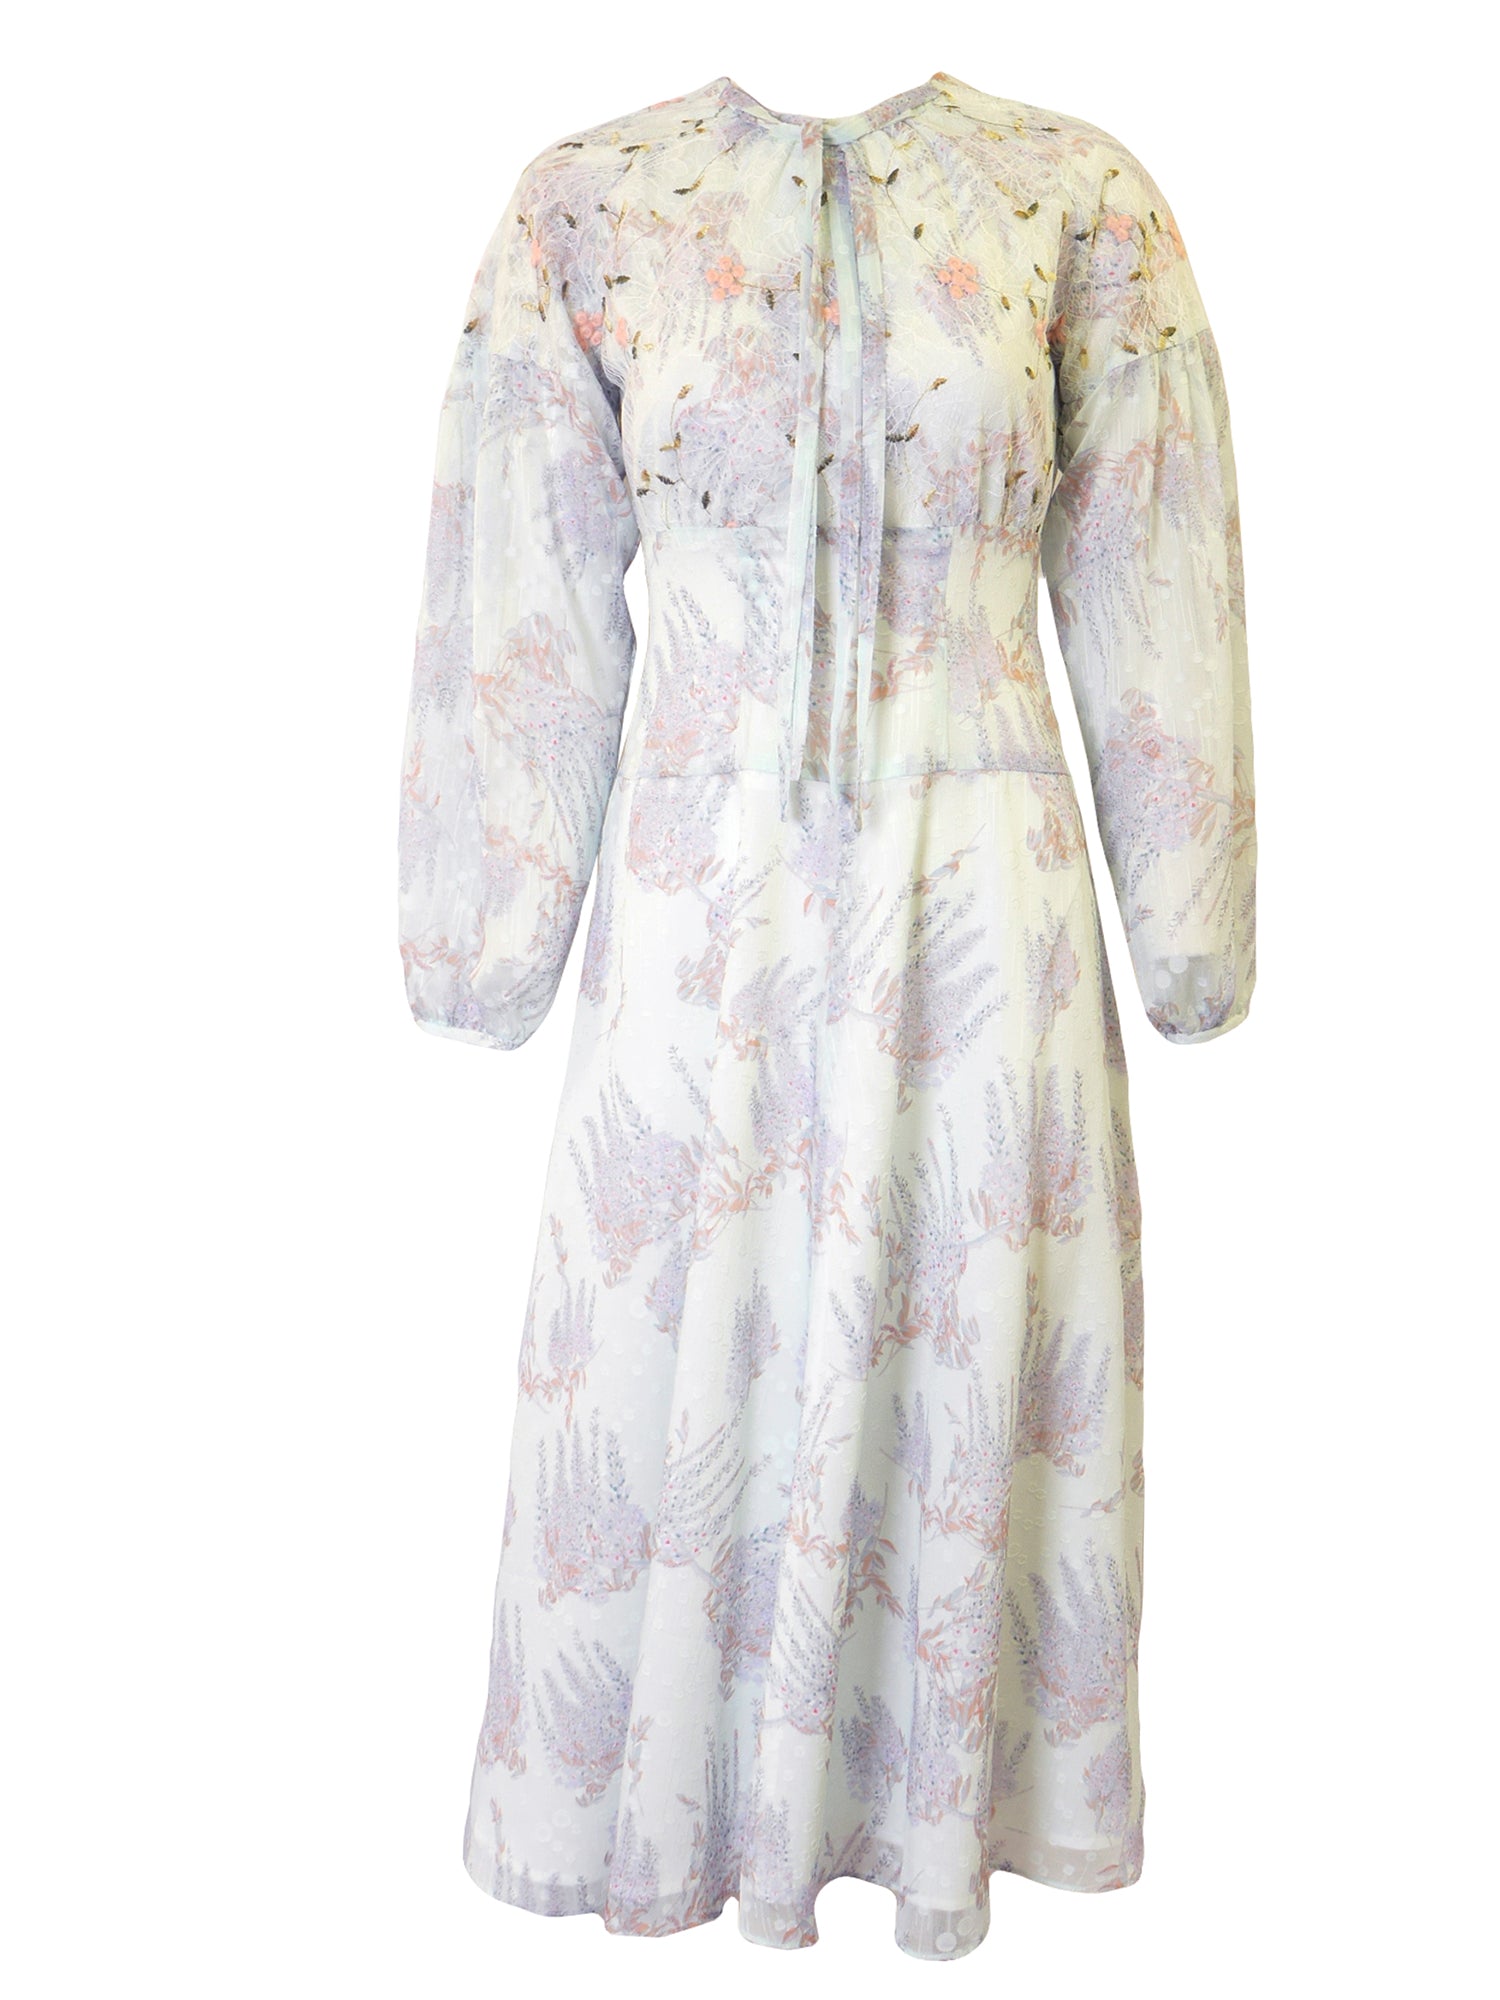 Nora Noh Wisteria Lace Dress